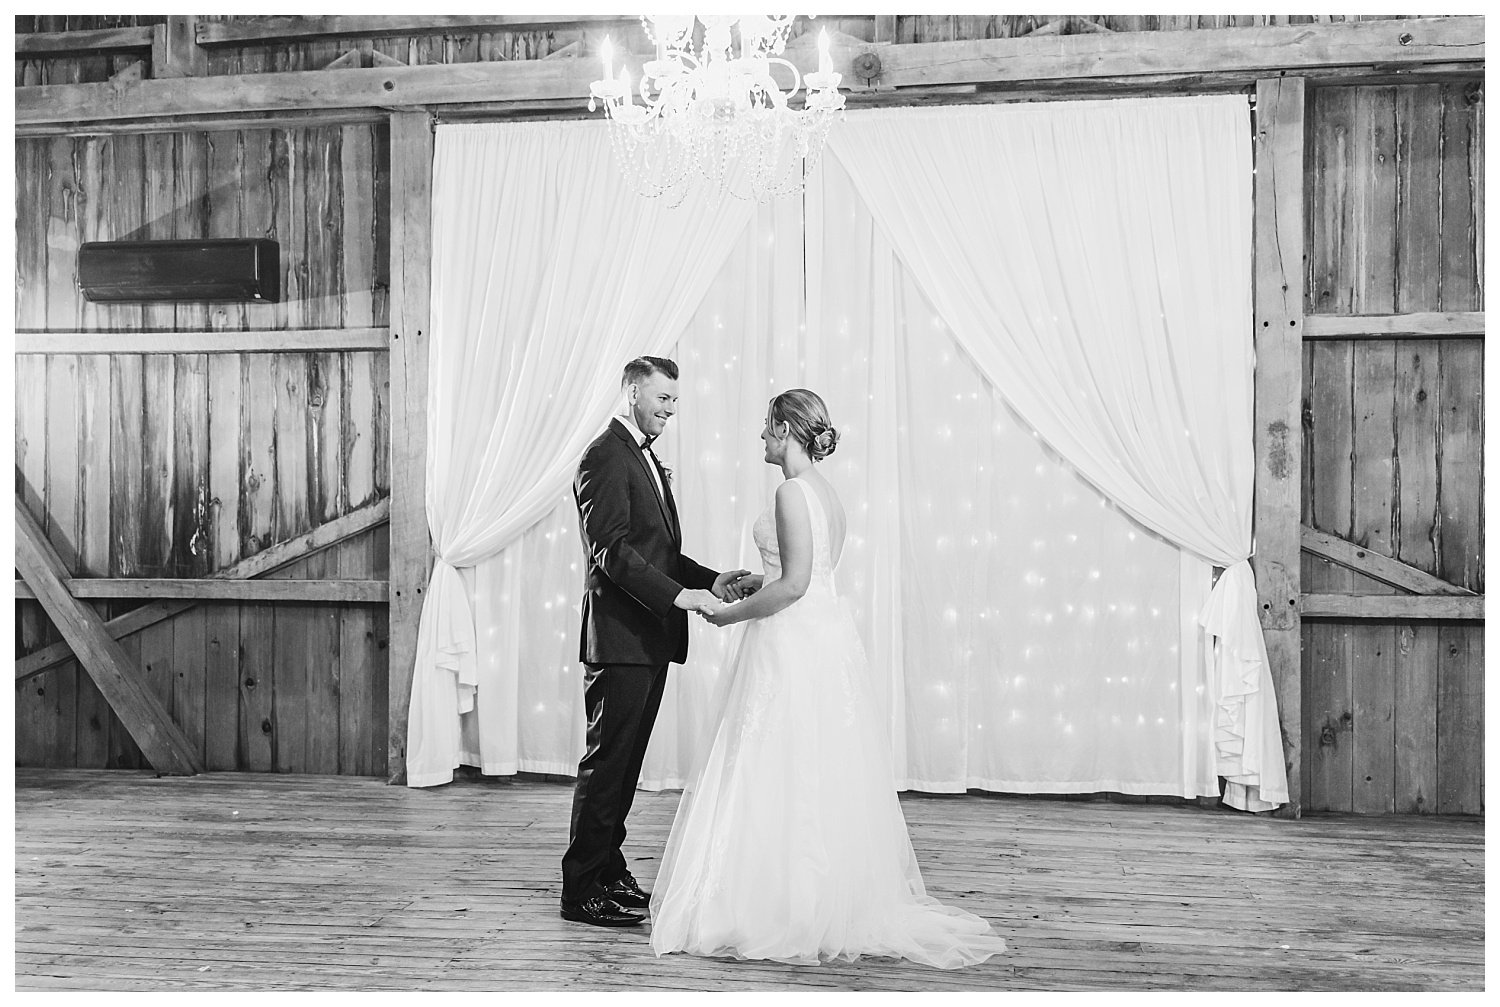 Springside Barn wedding, barn reception, bride and groom first dance